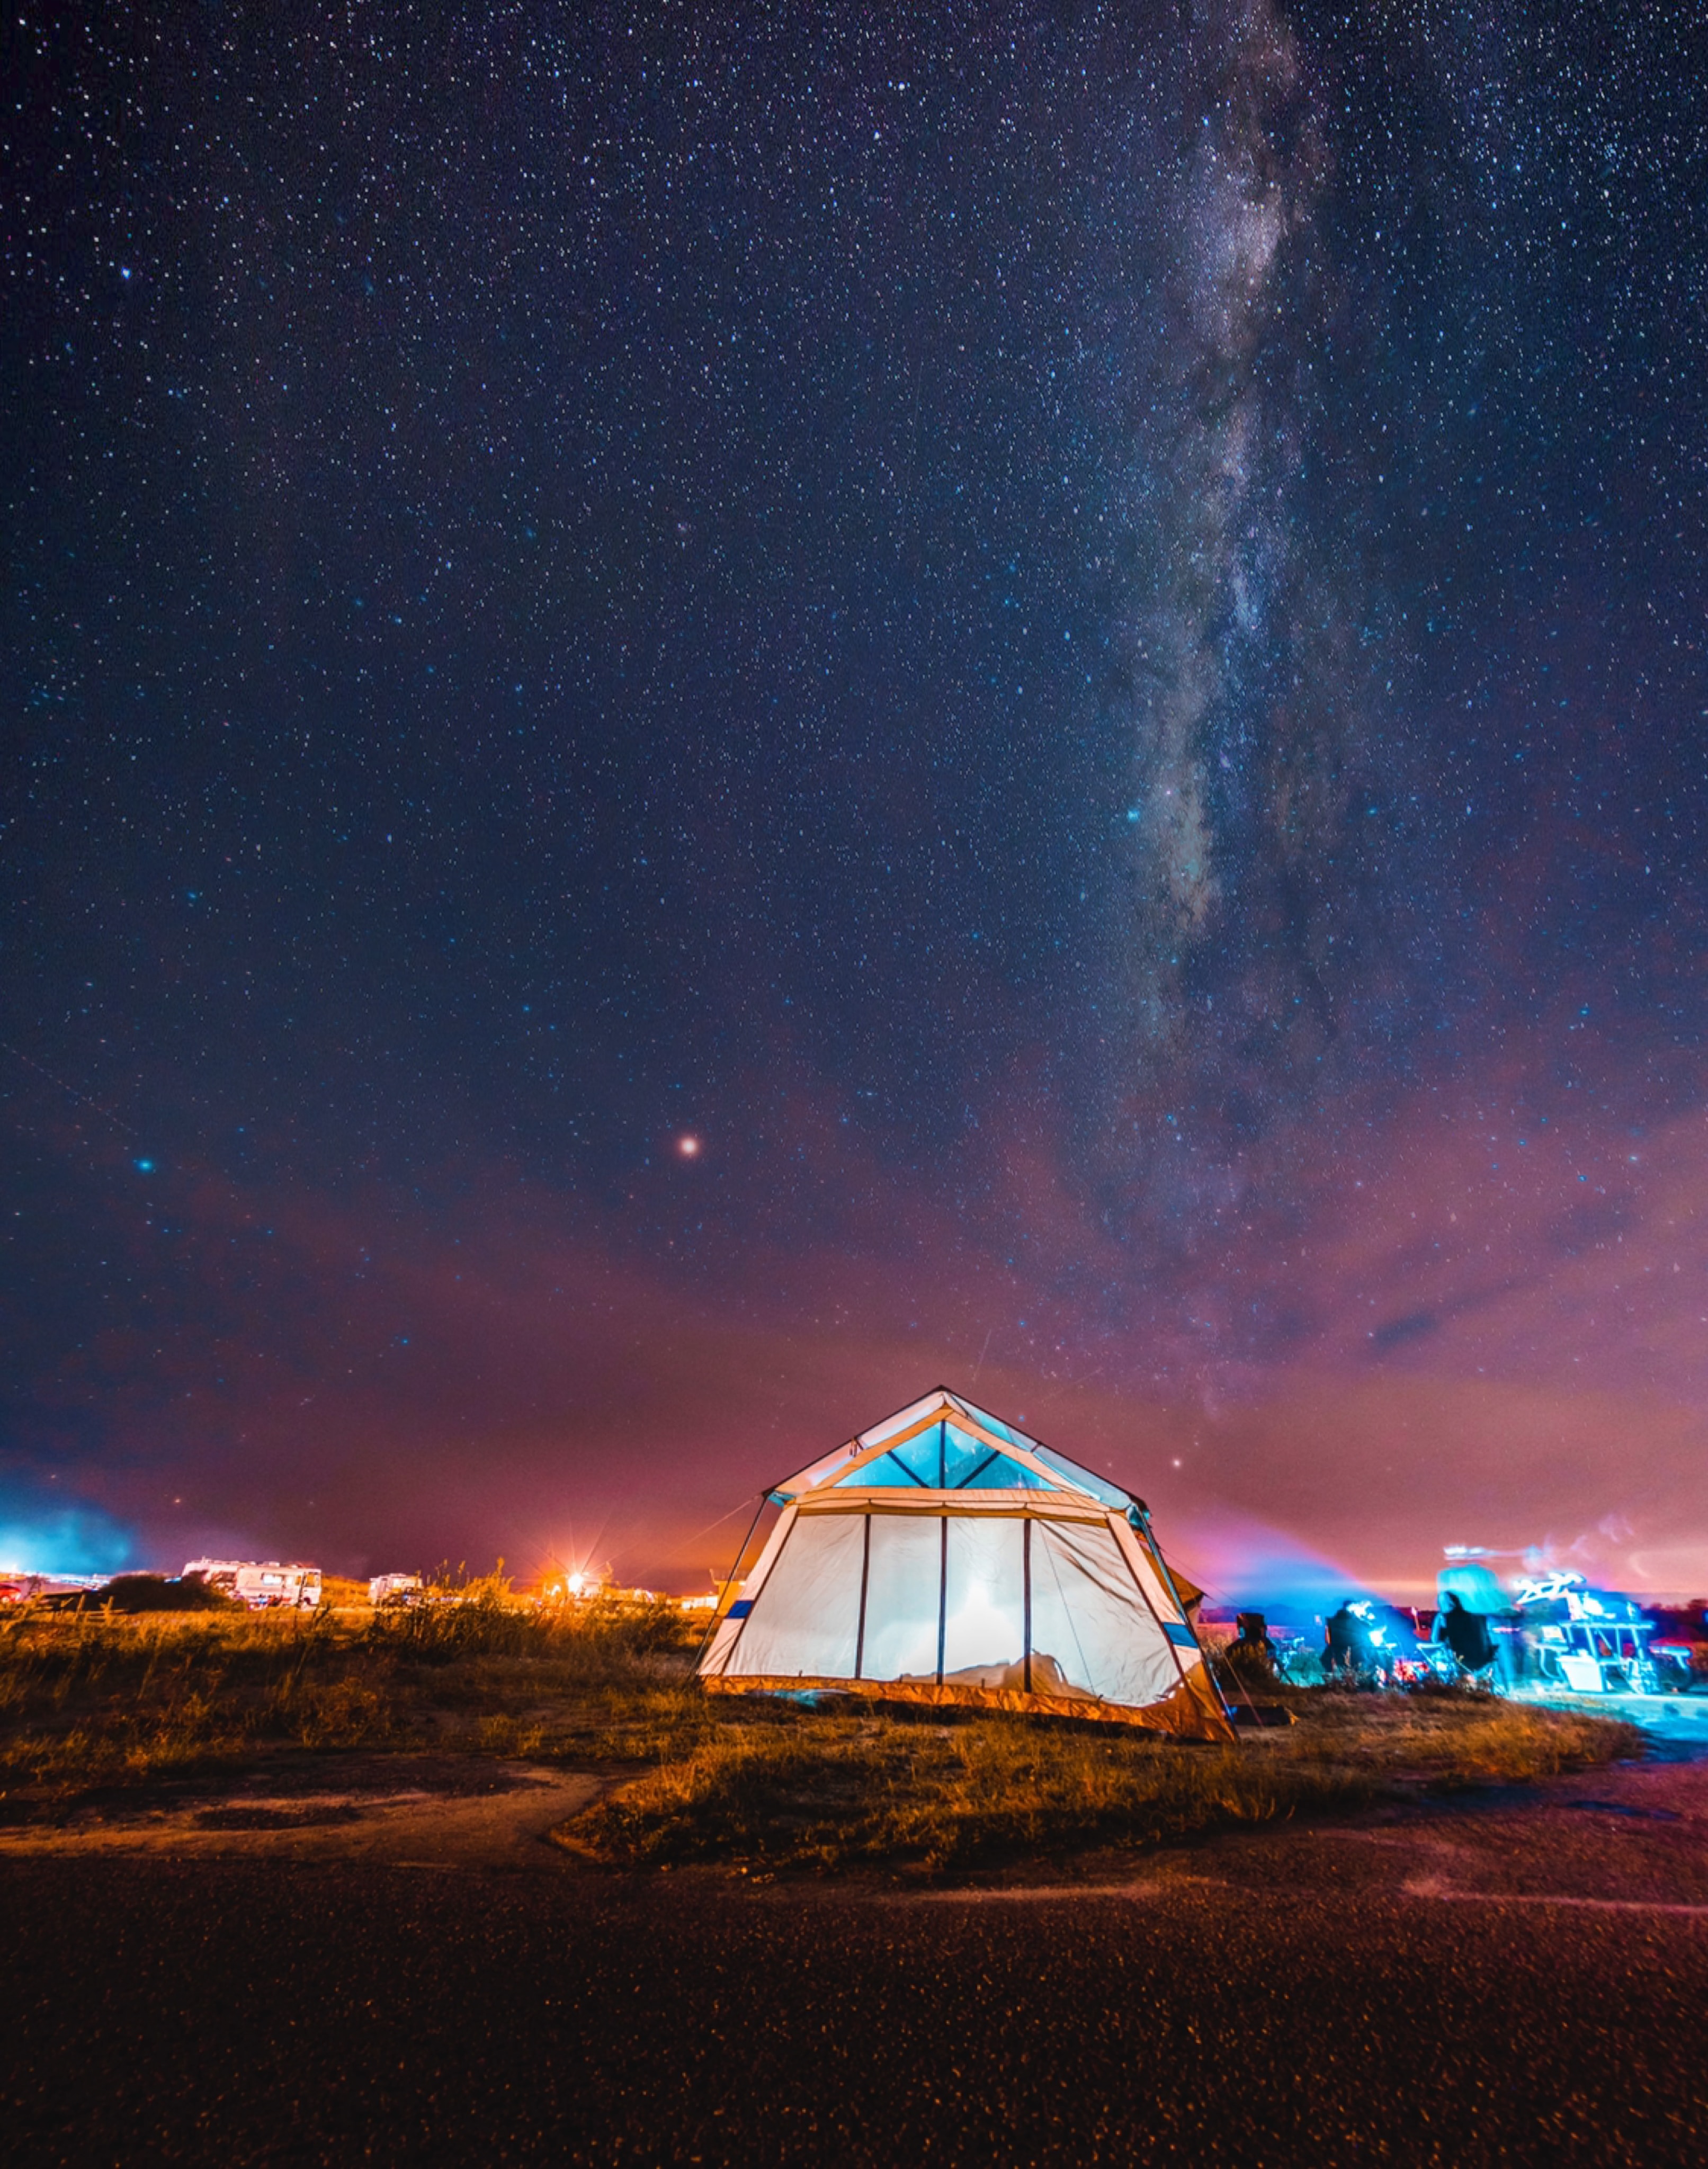 campsite, camping, night, miscellanea, miscellaneous, starry sky, tent